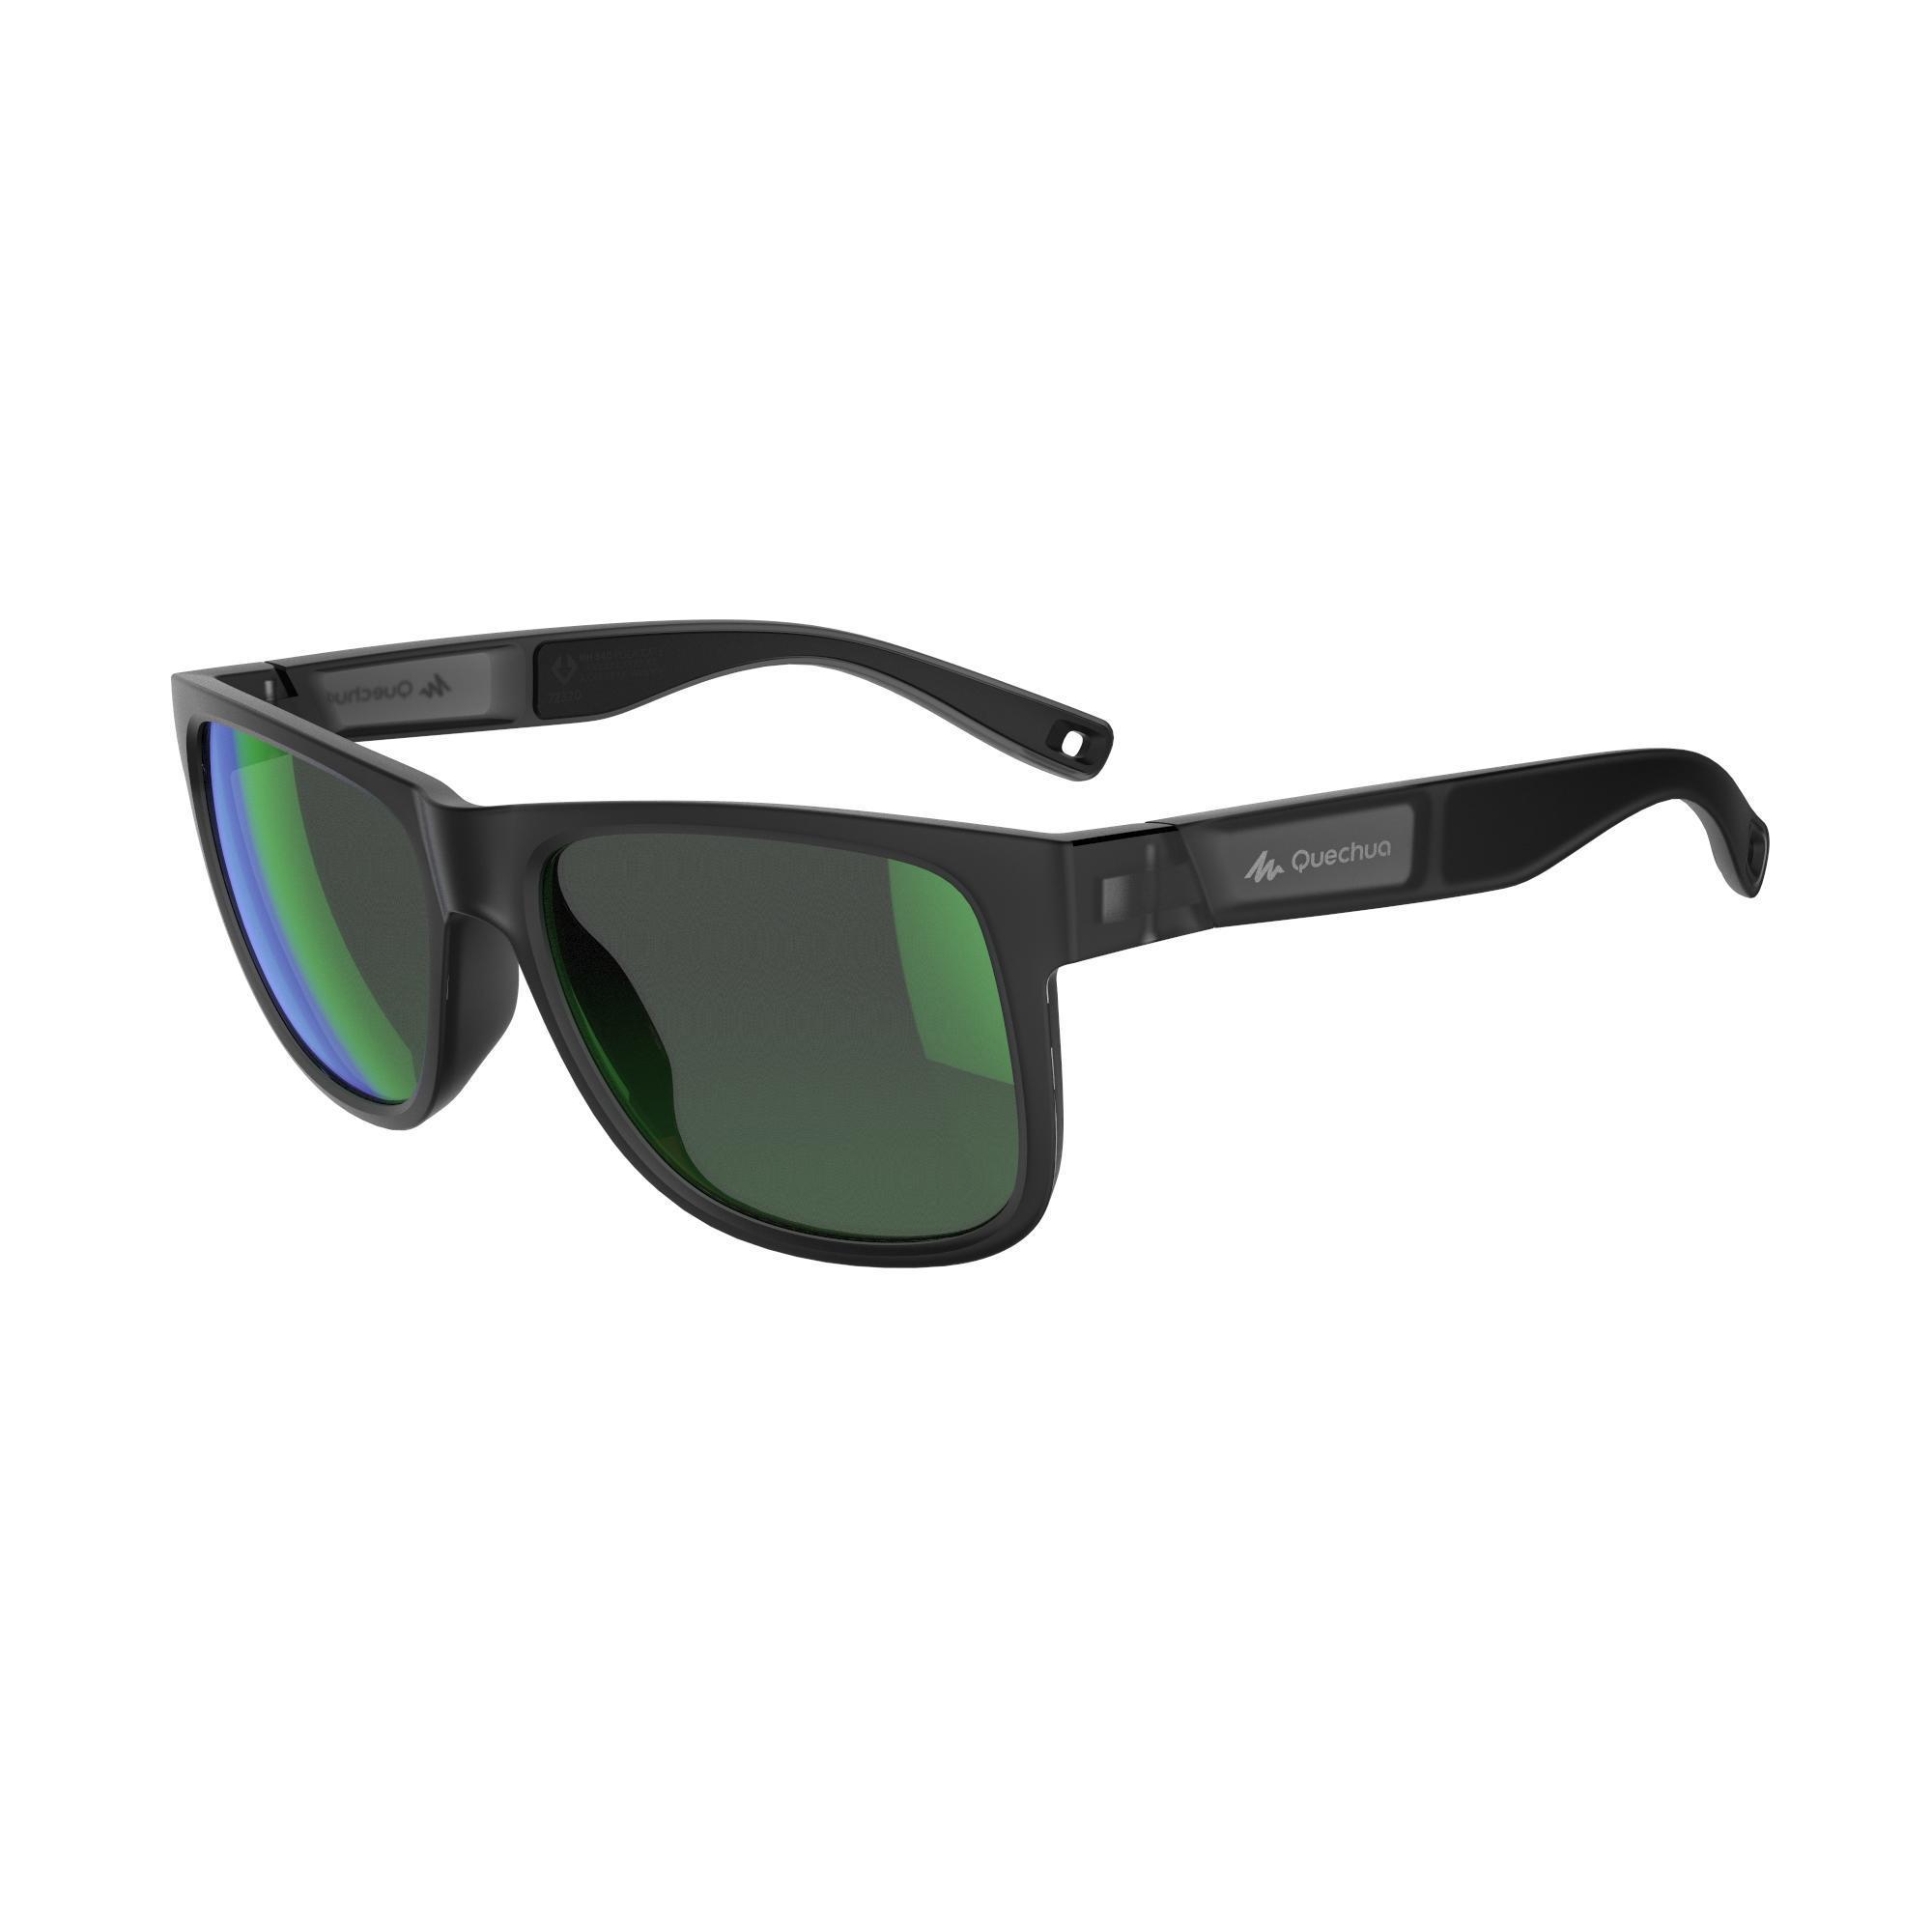 Adult sport sunglasses - Decathlon